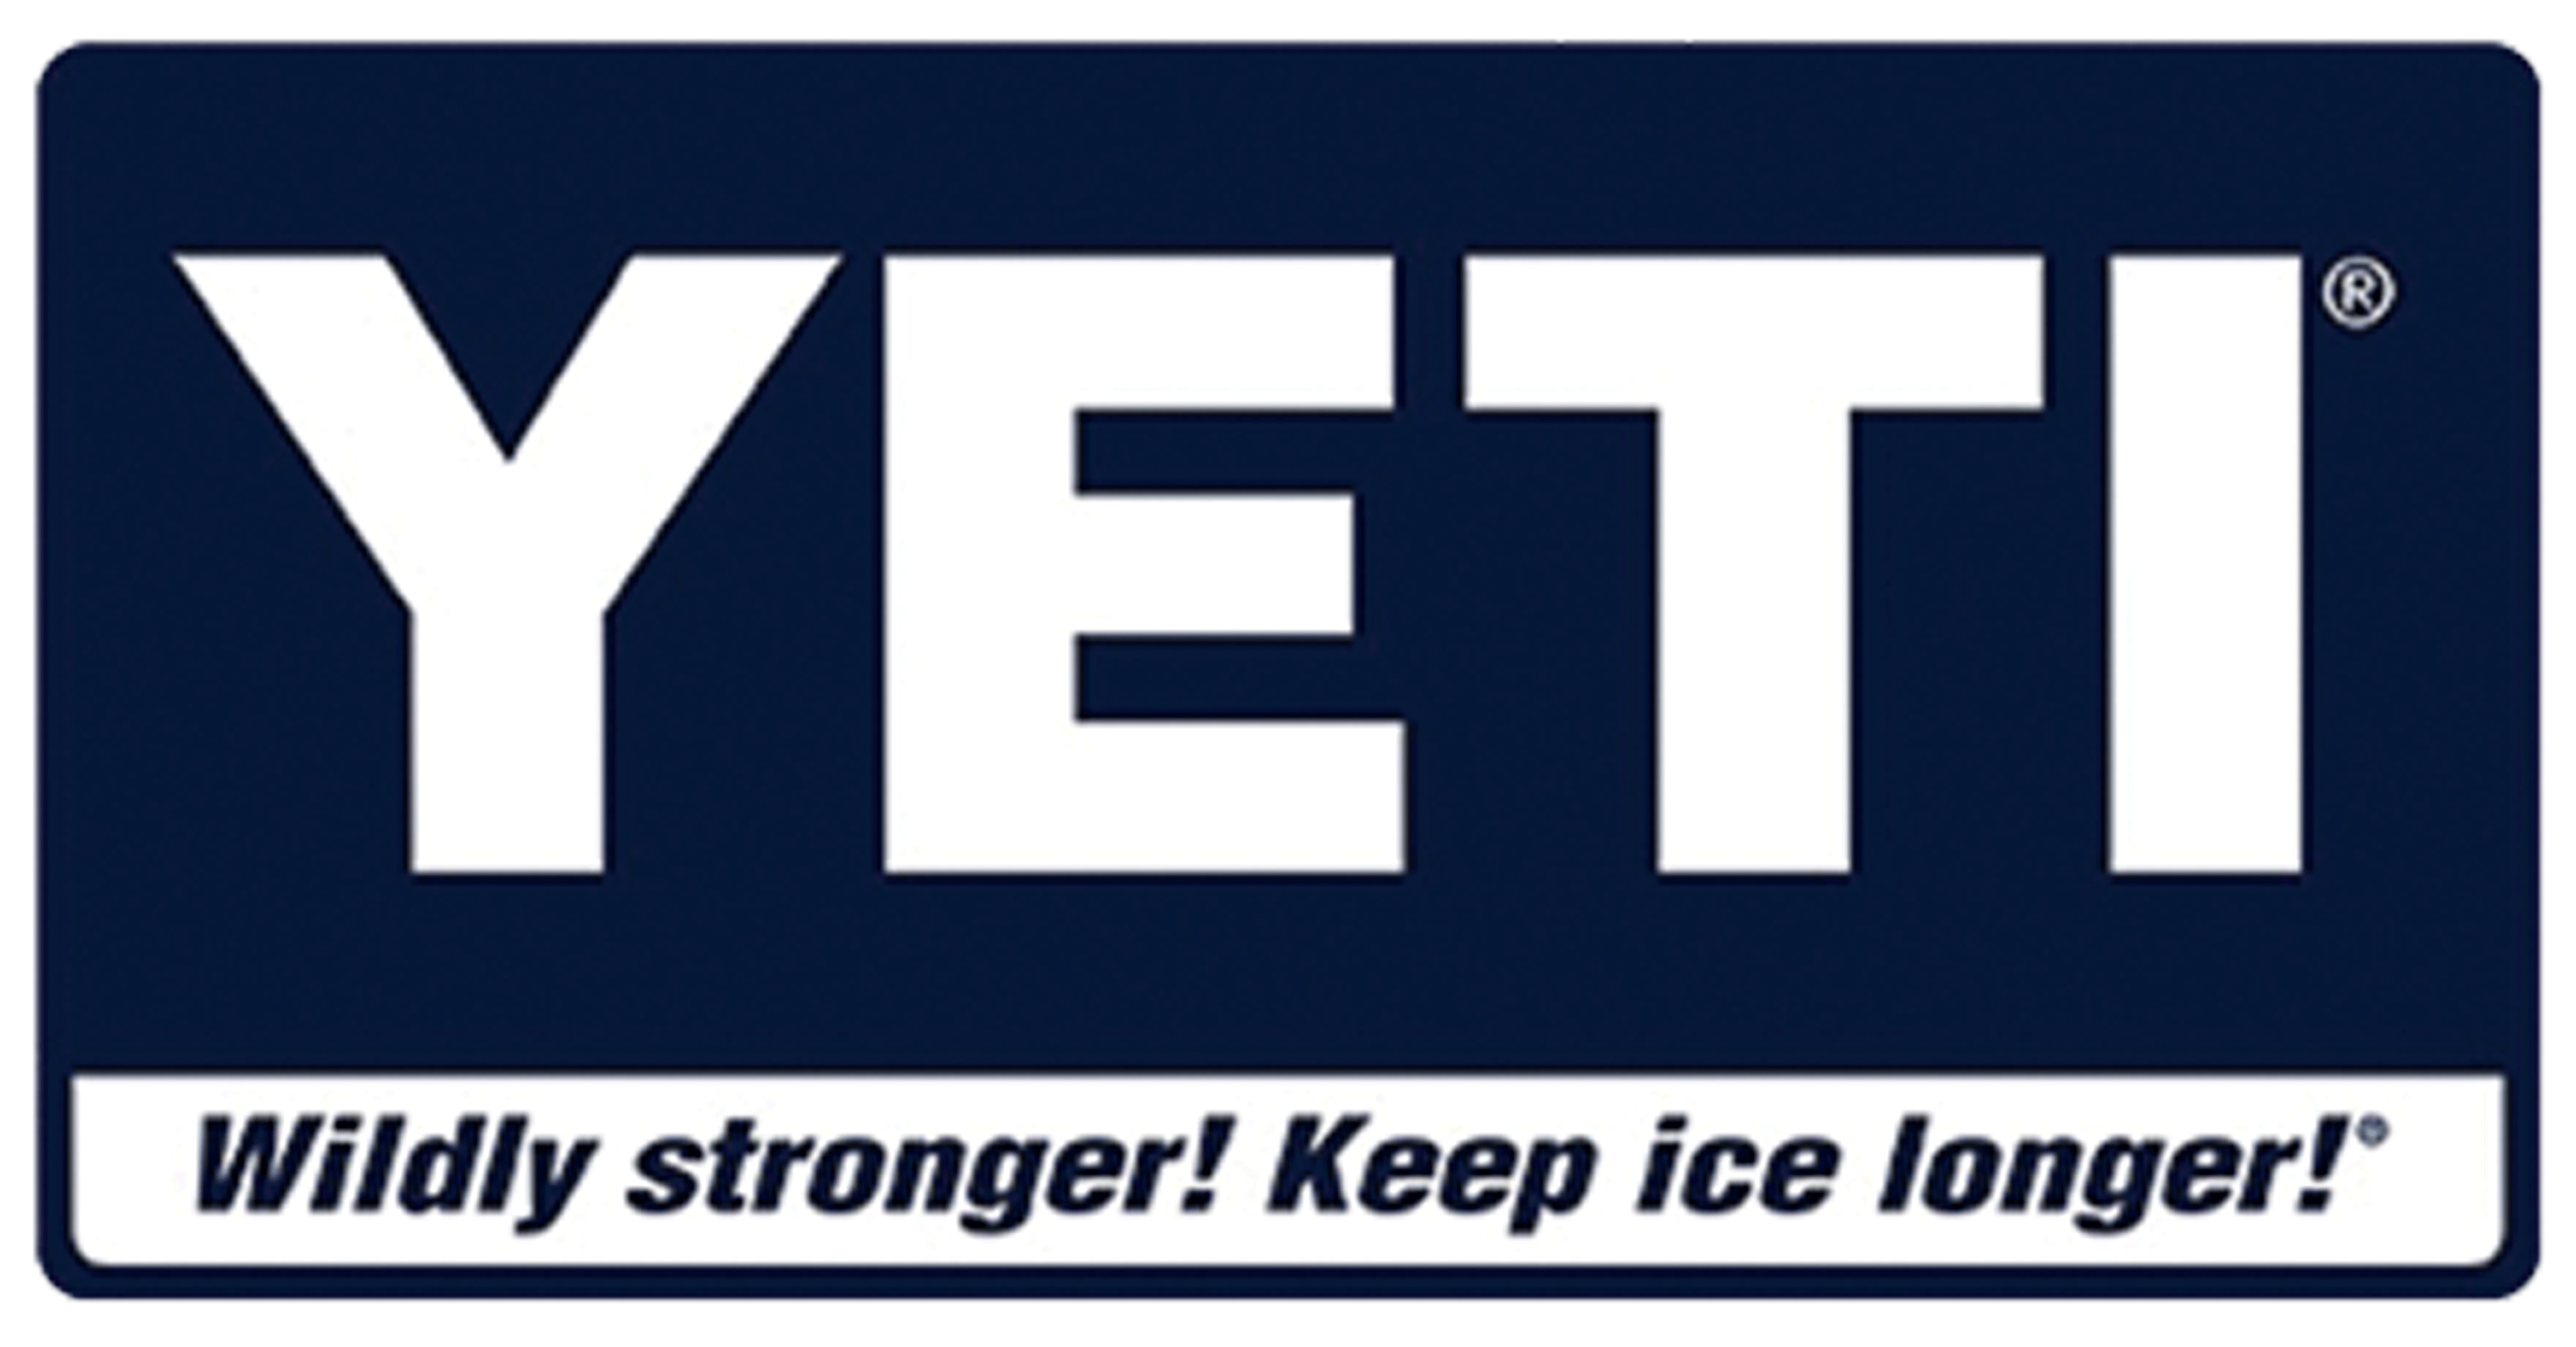 Yeti Logo - yeti coolers logo Brands in 2019